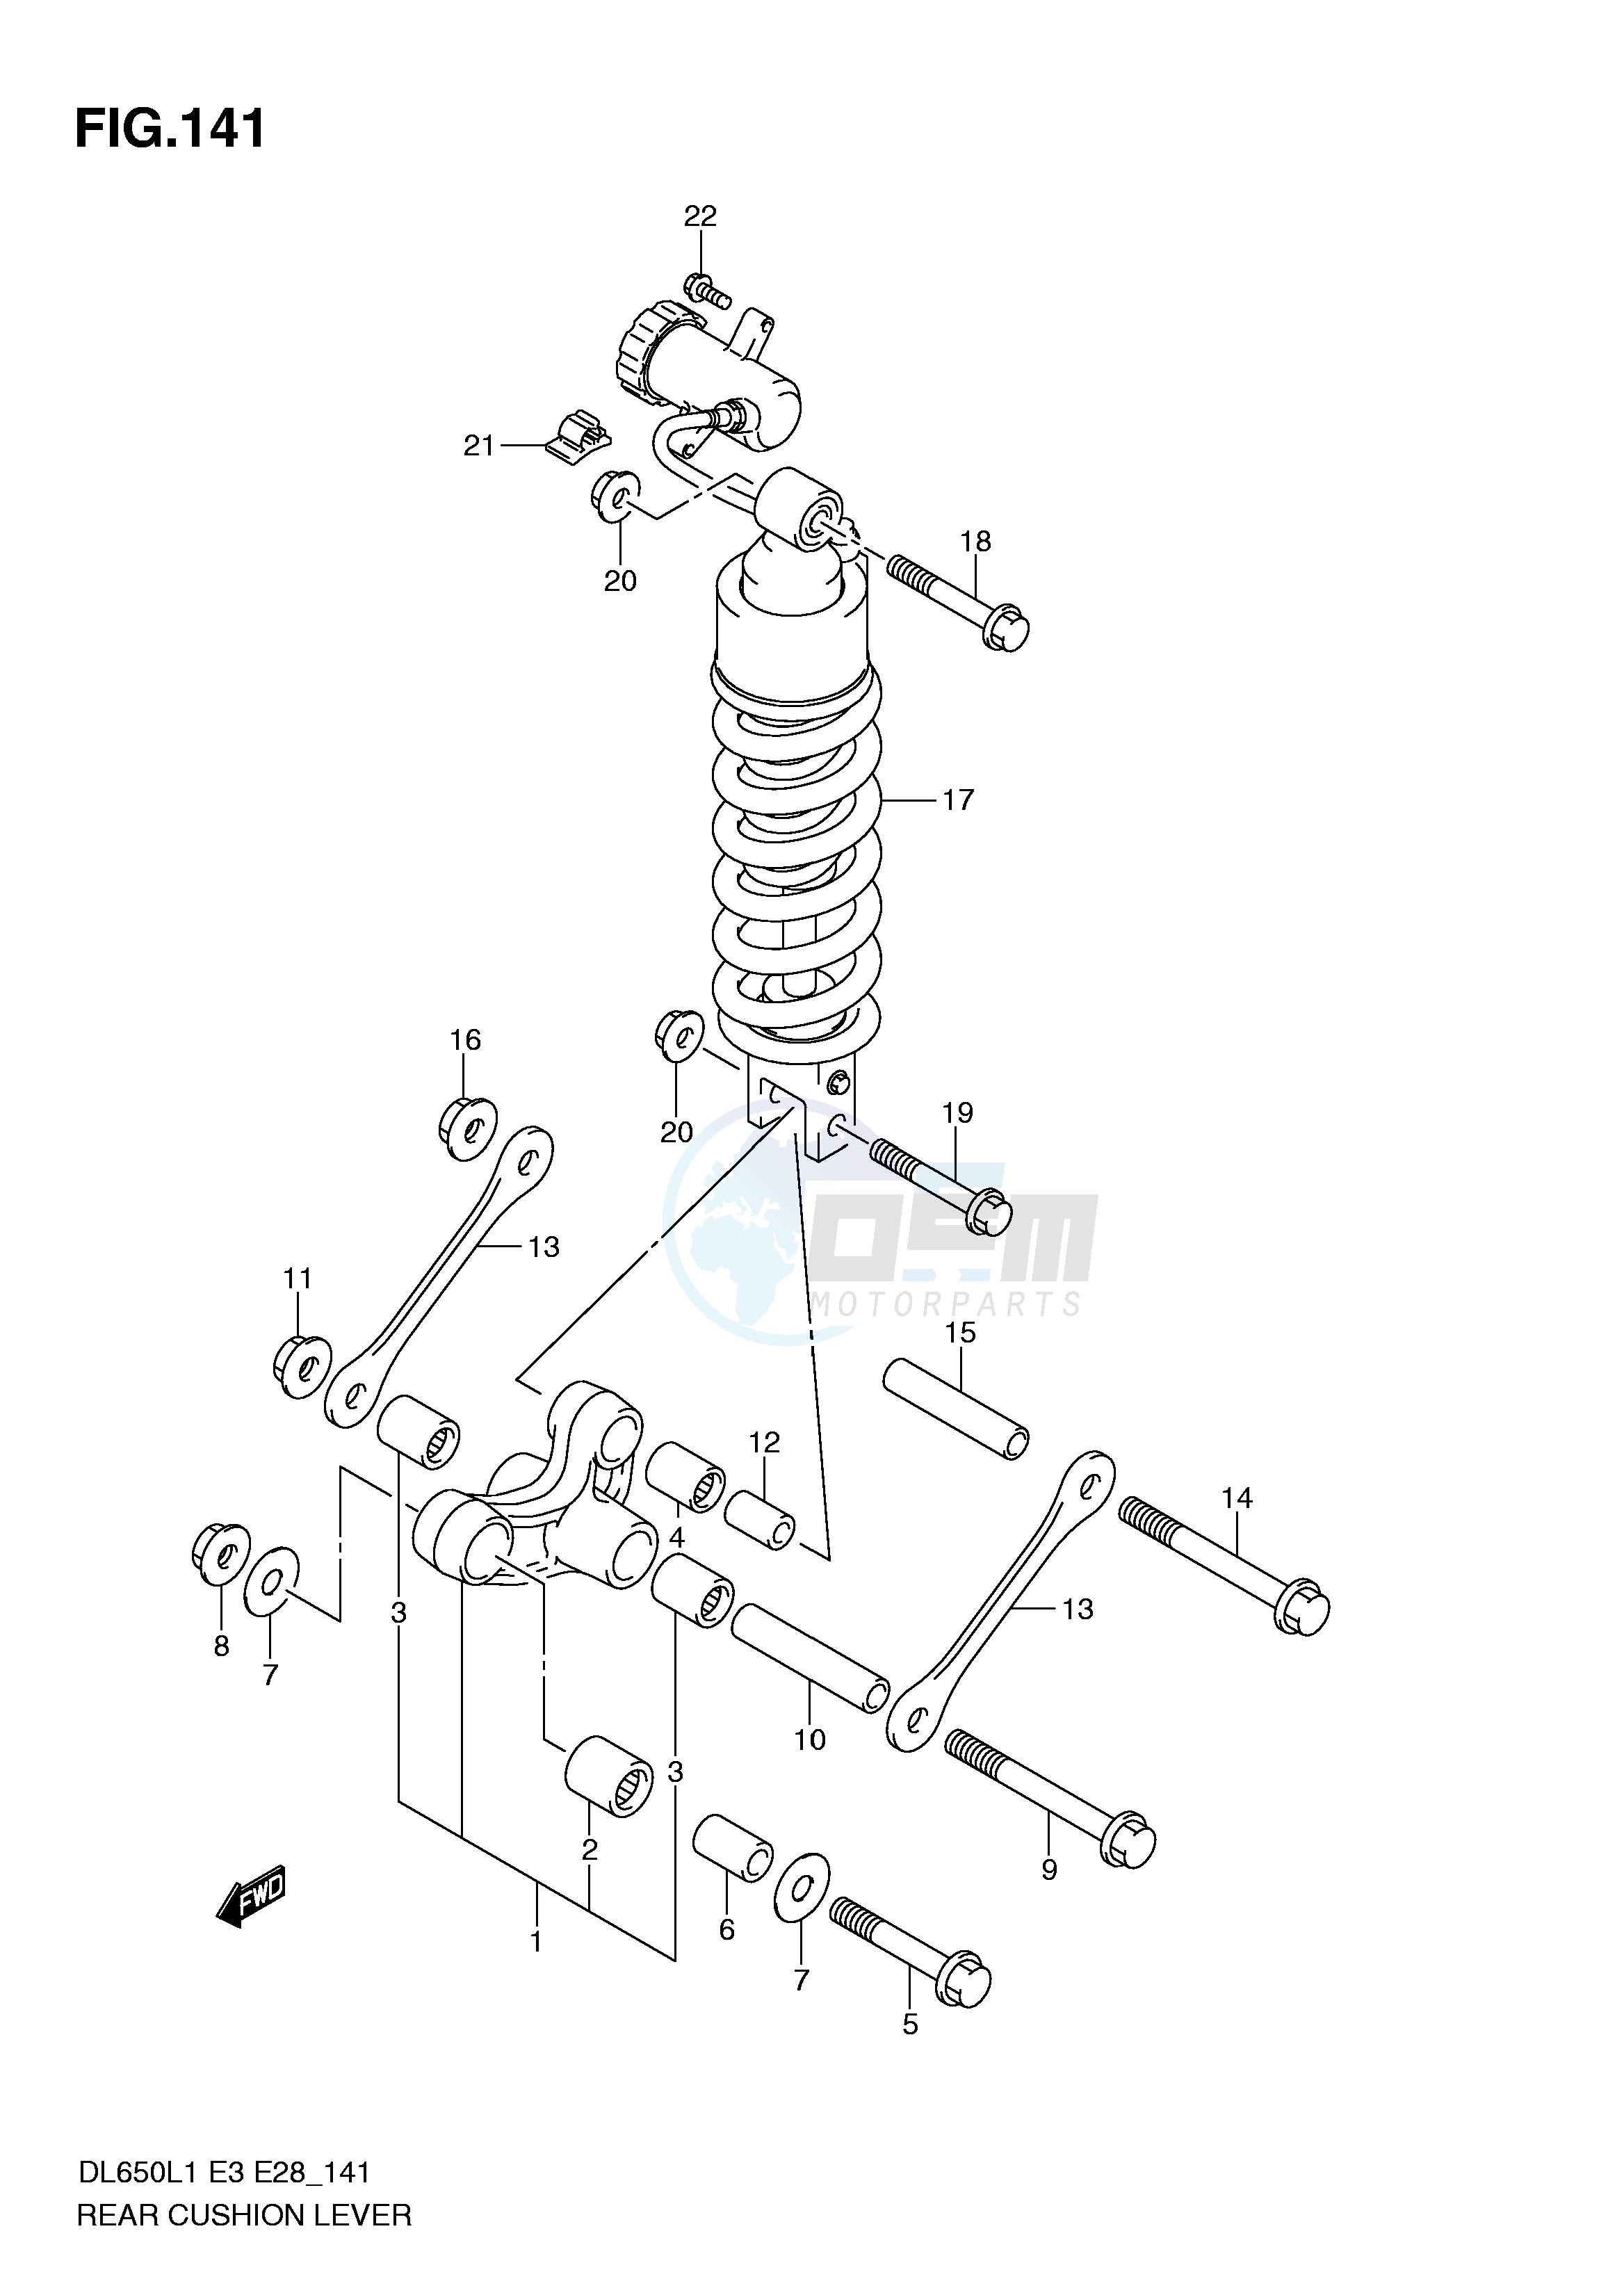 REAR CUSHION LEVER (DL650AL1 E33) blueprint